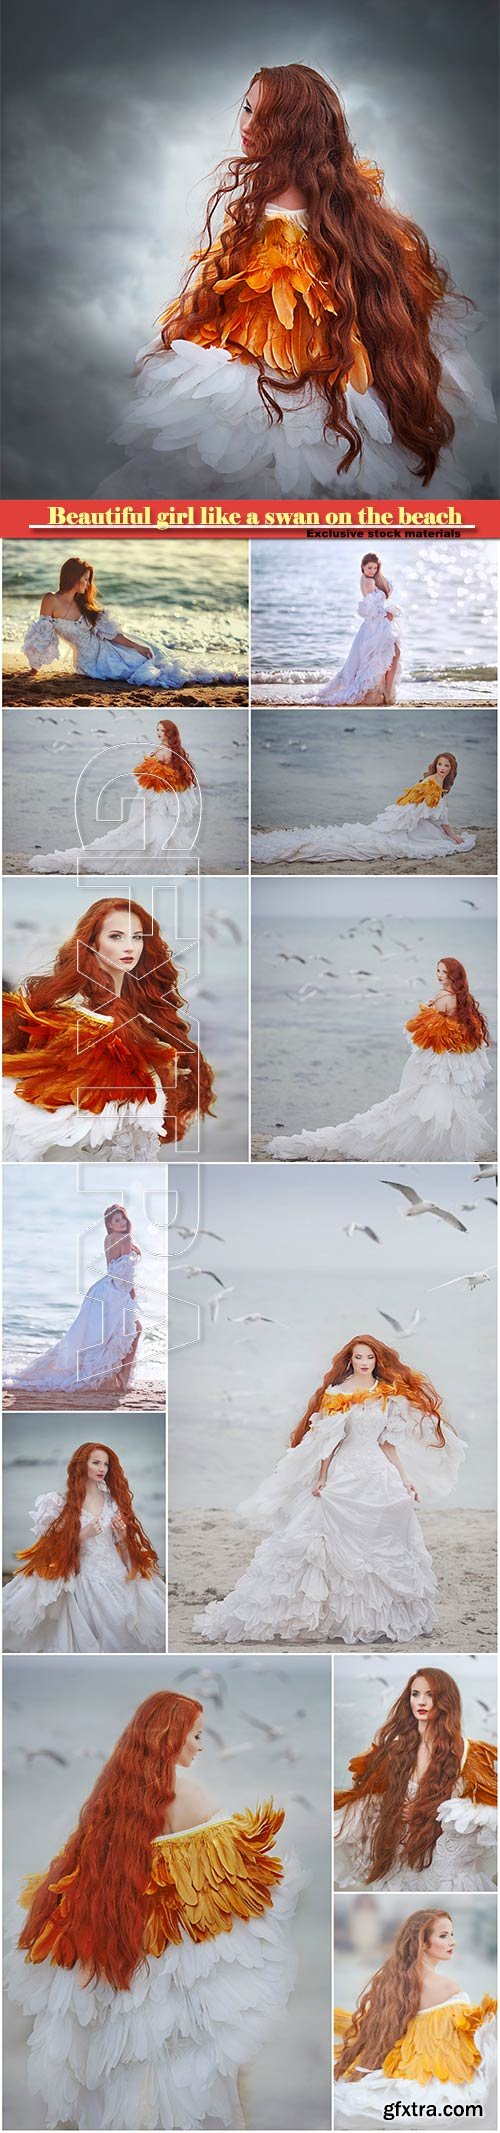 Beautiful girl like a swan on the beach